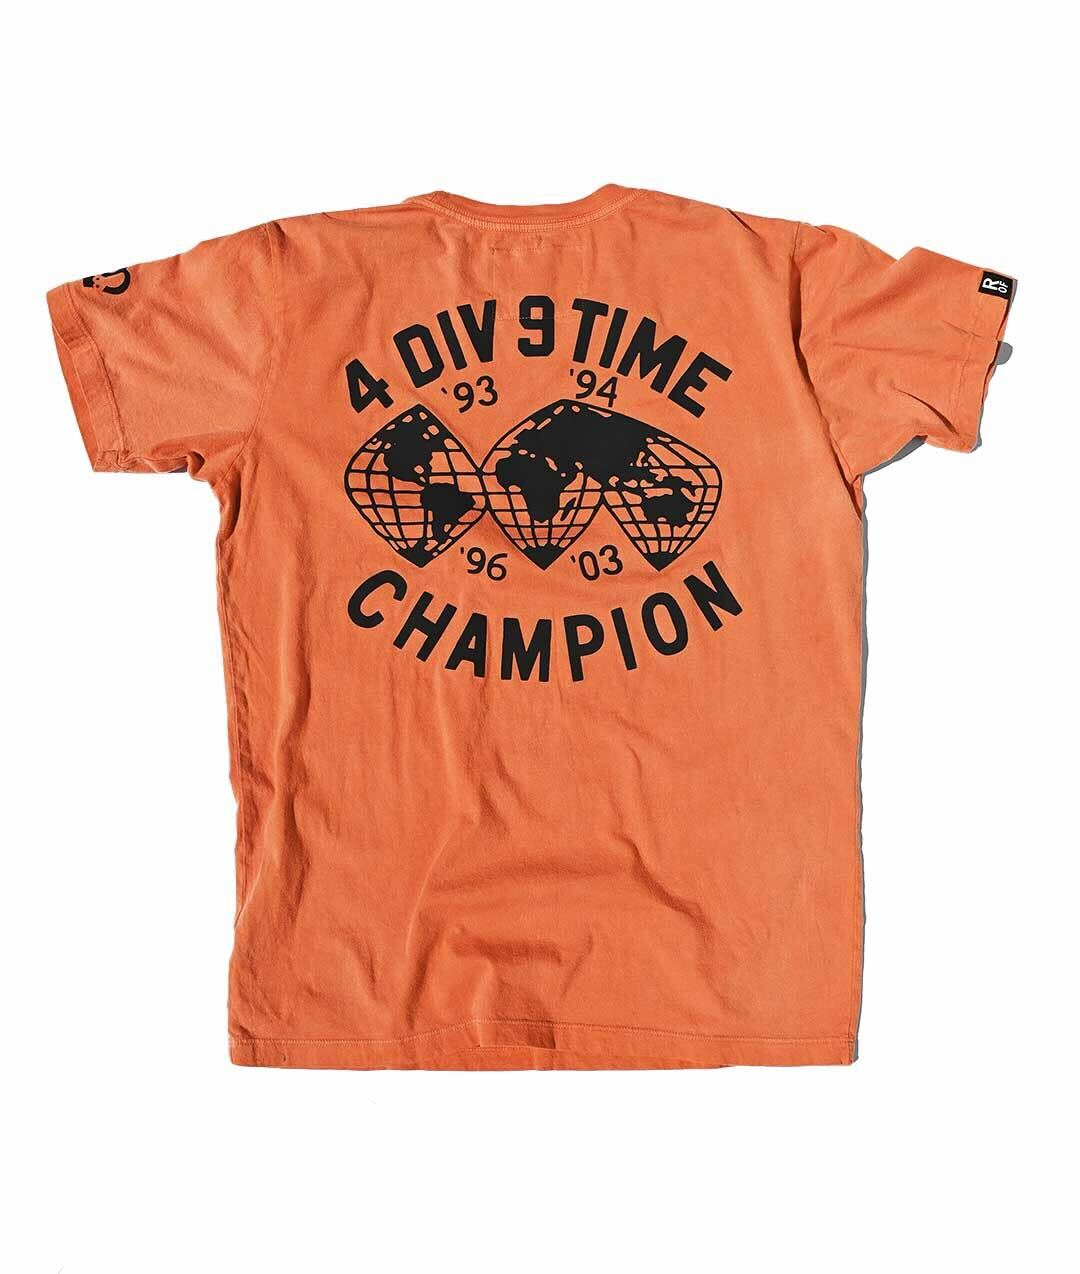 Roy Jones Jr. 4 Div Champ Orange Tee - Roots of Fight